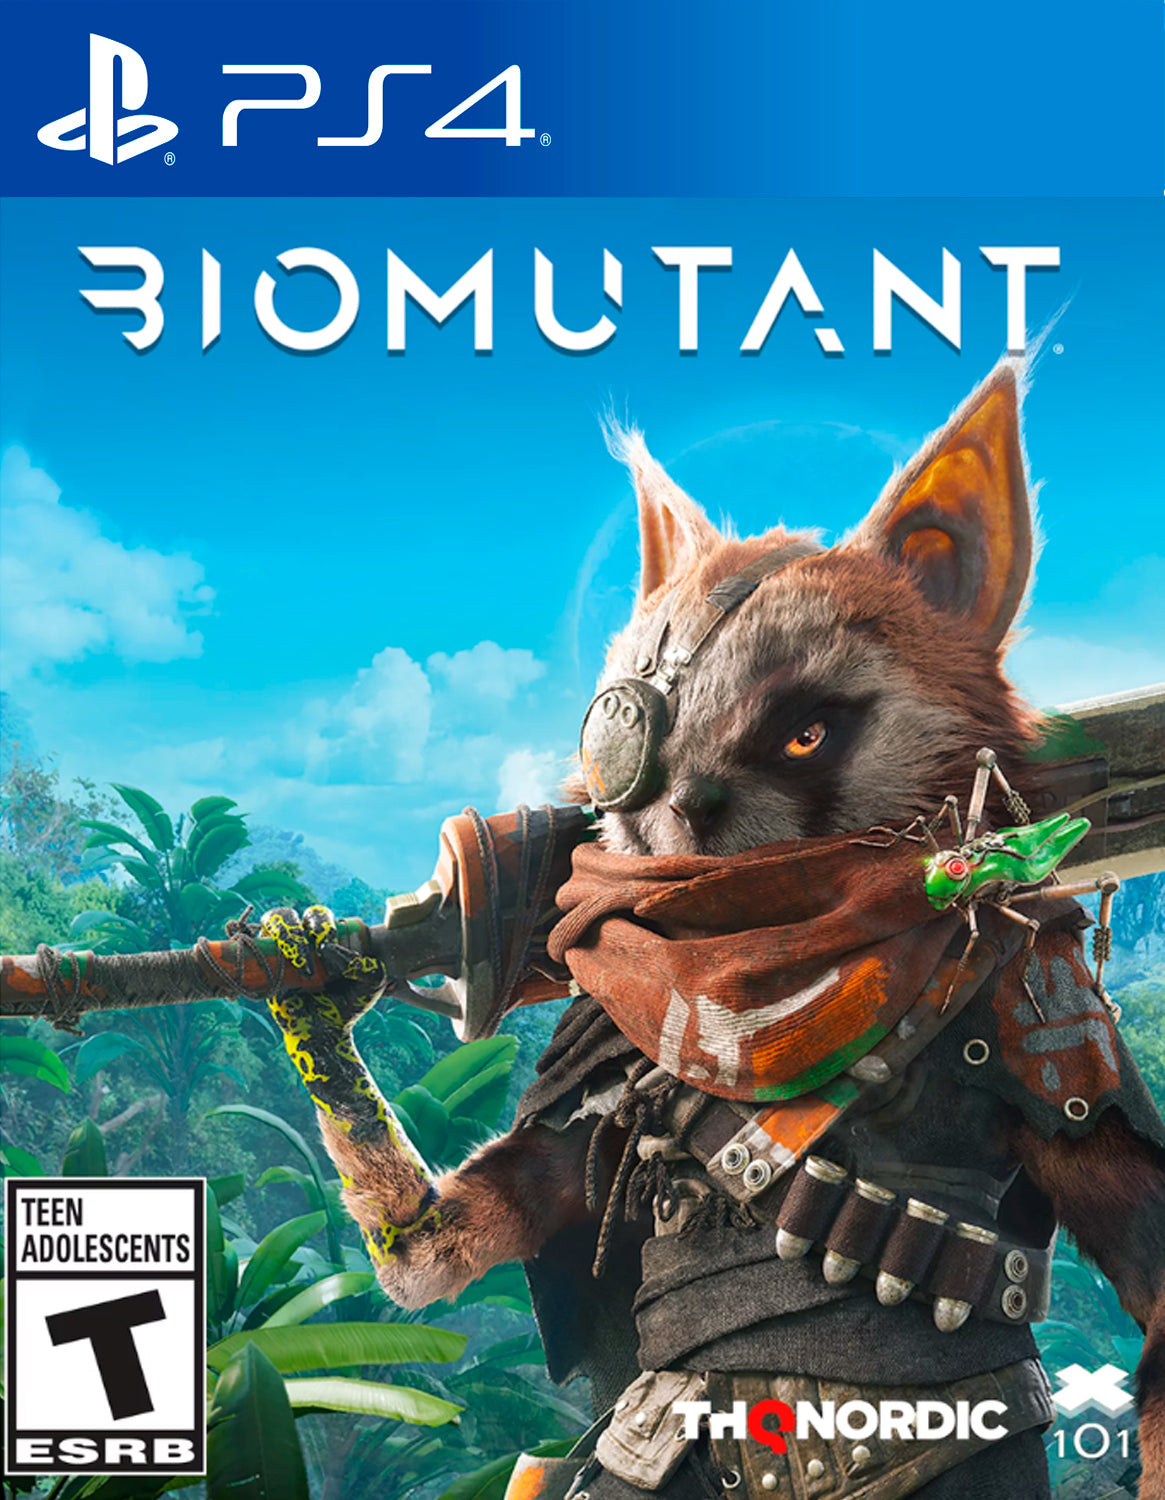 Biomutant - PS4 Mídia Digital